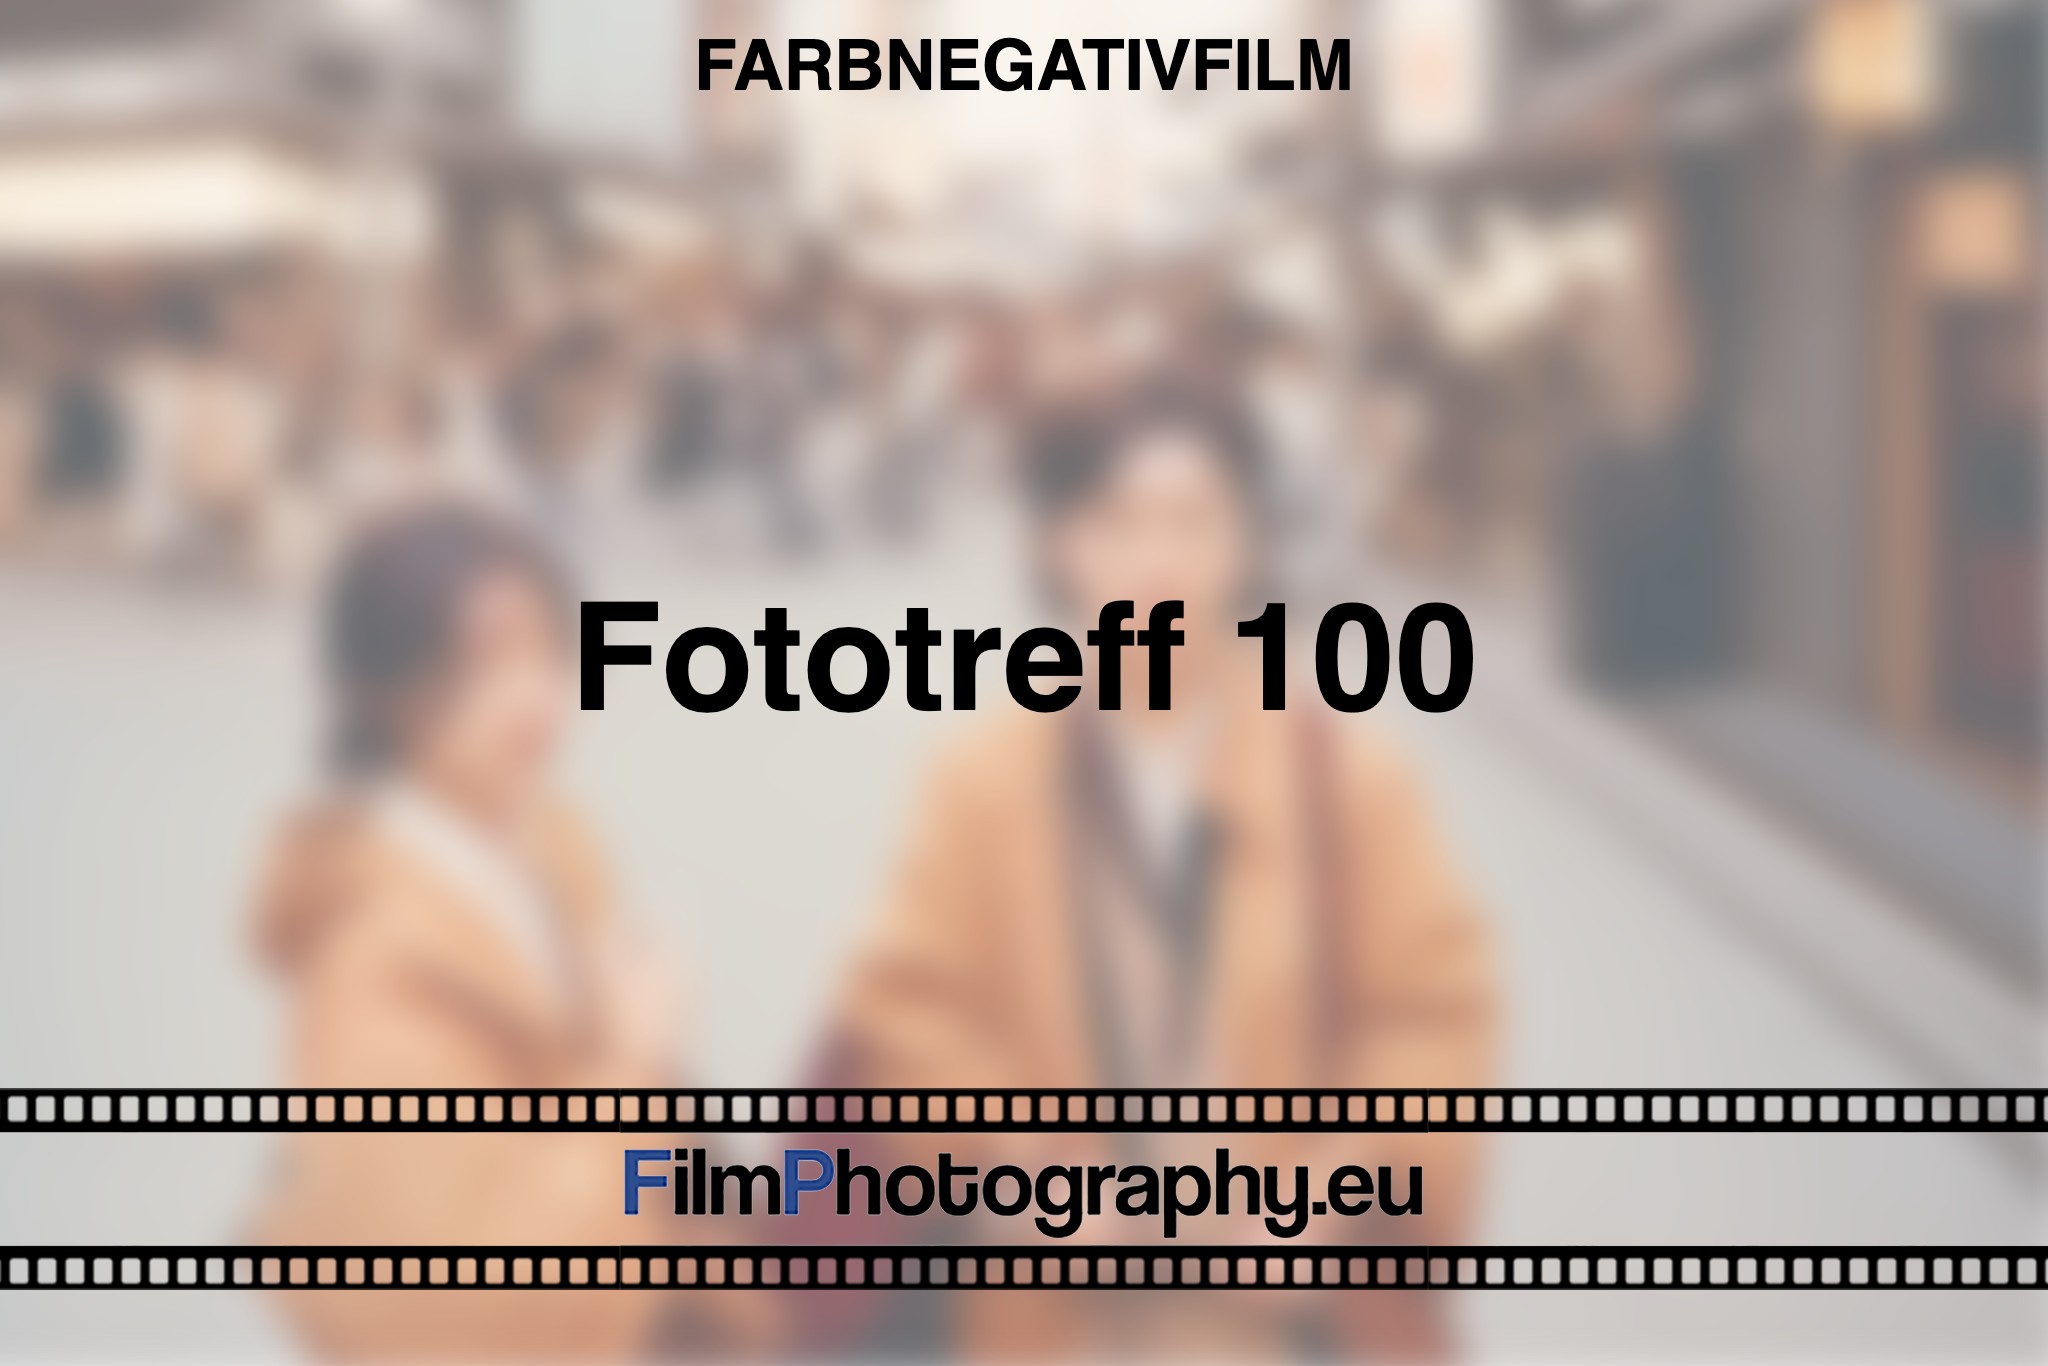 fototreff-100-farbnegativfilm-bnv